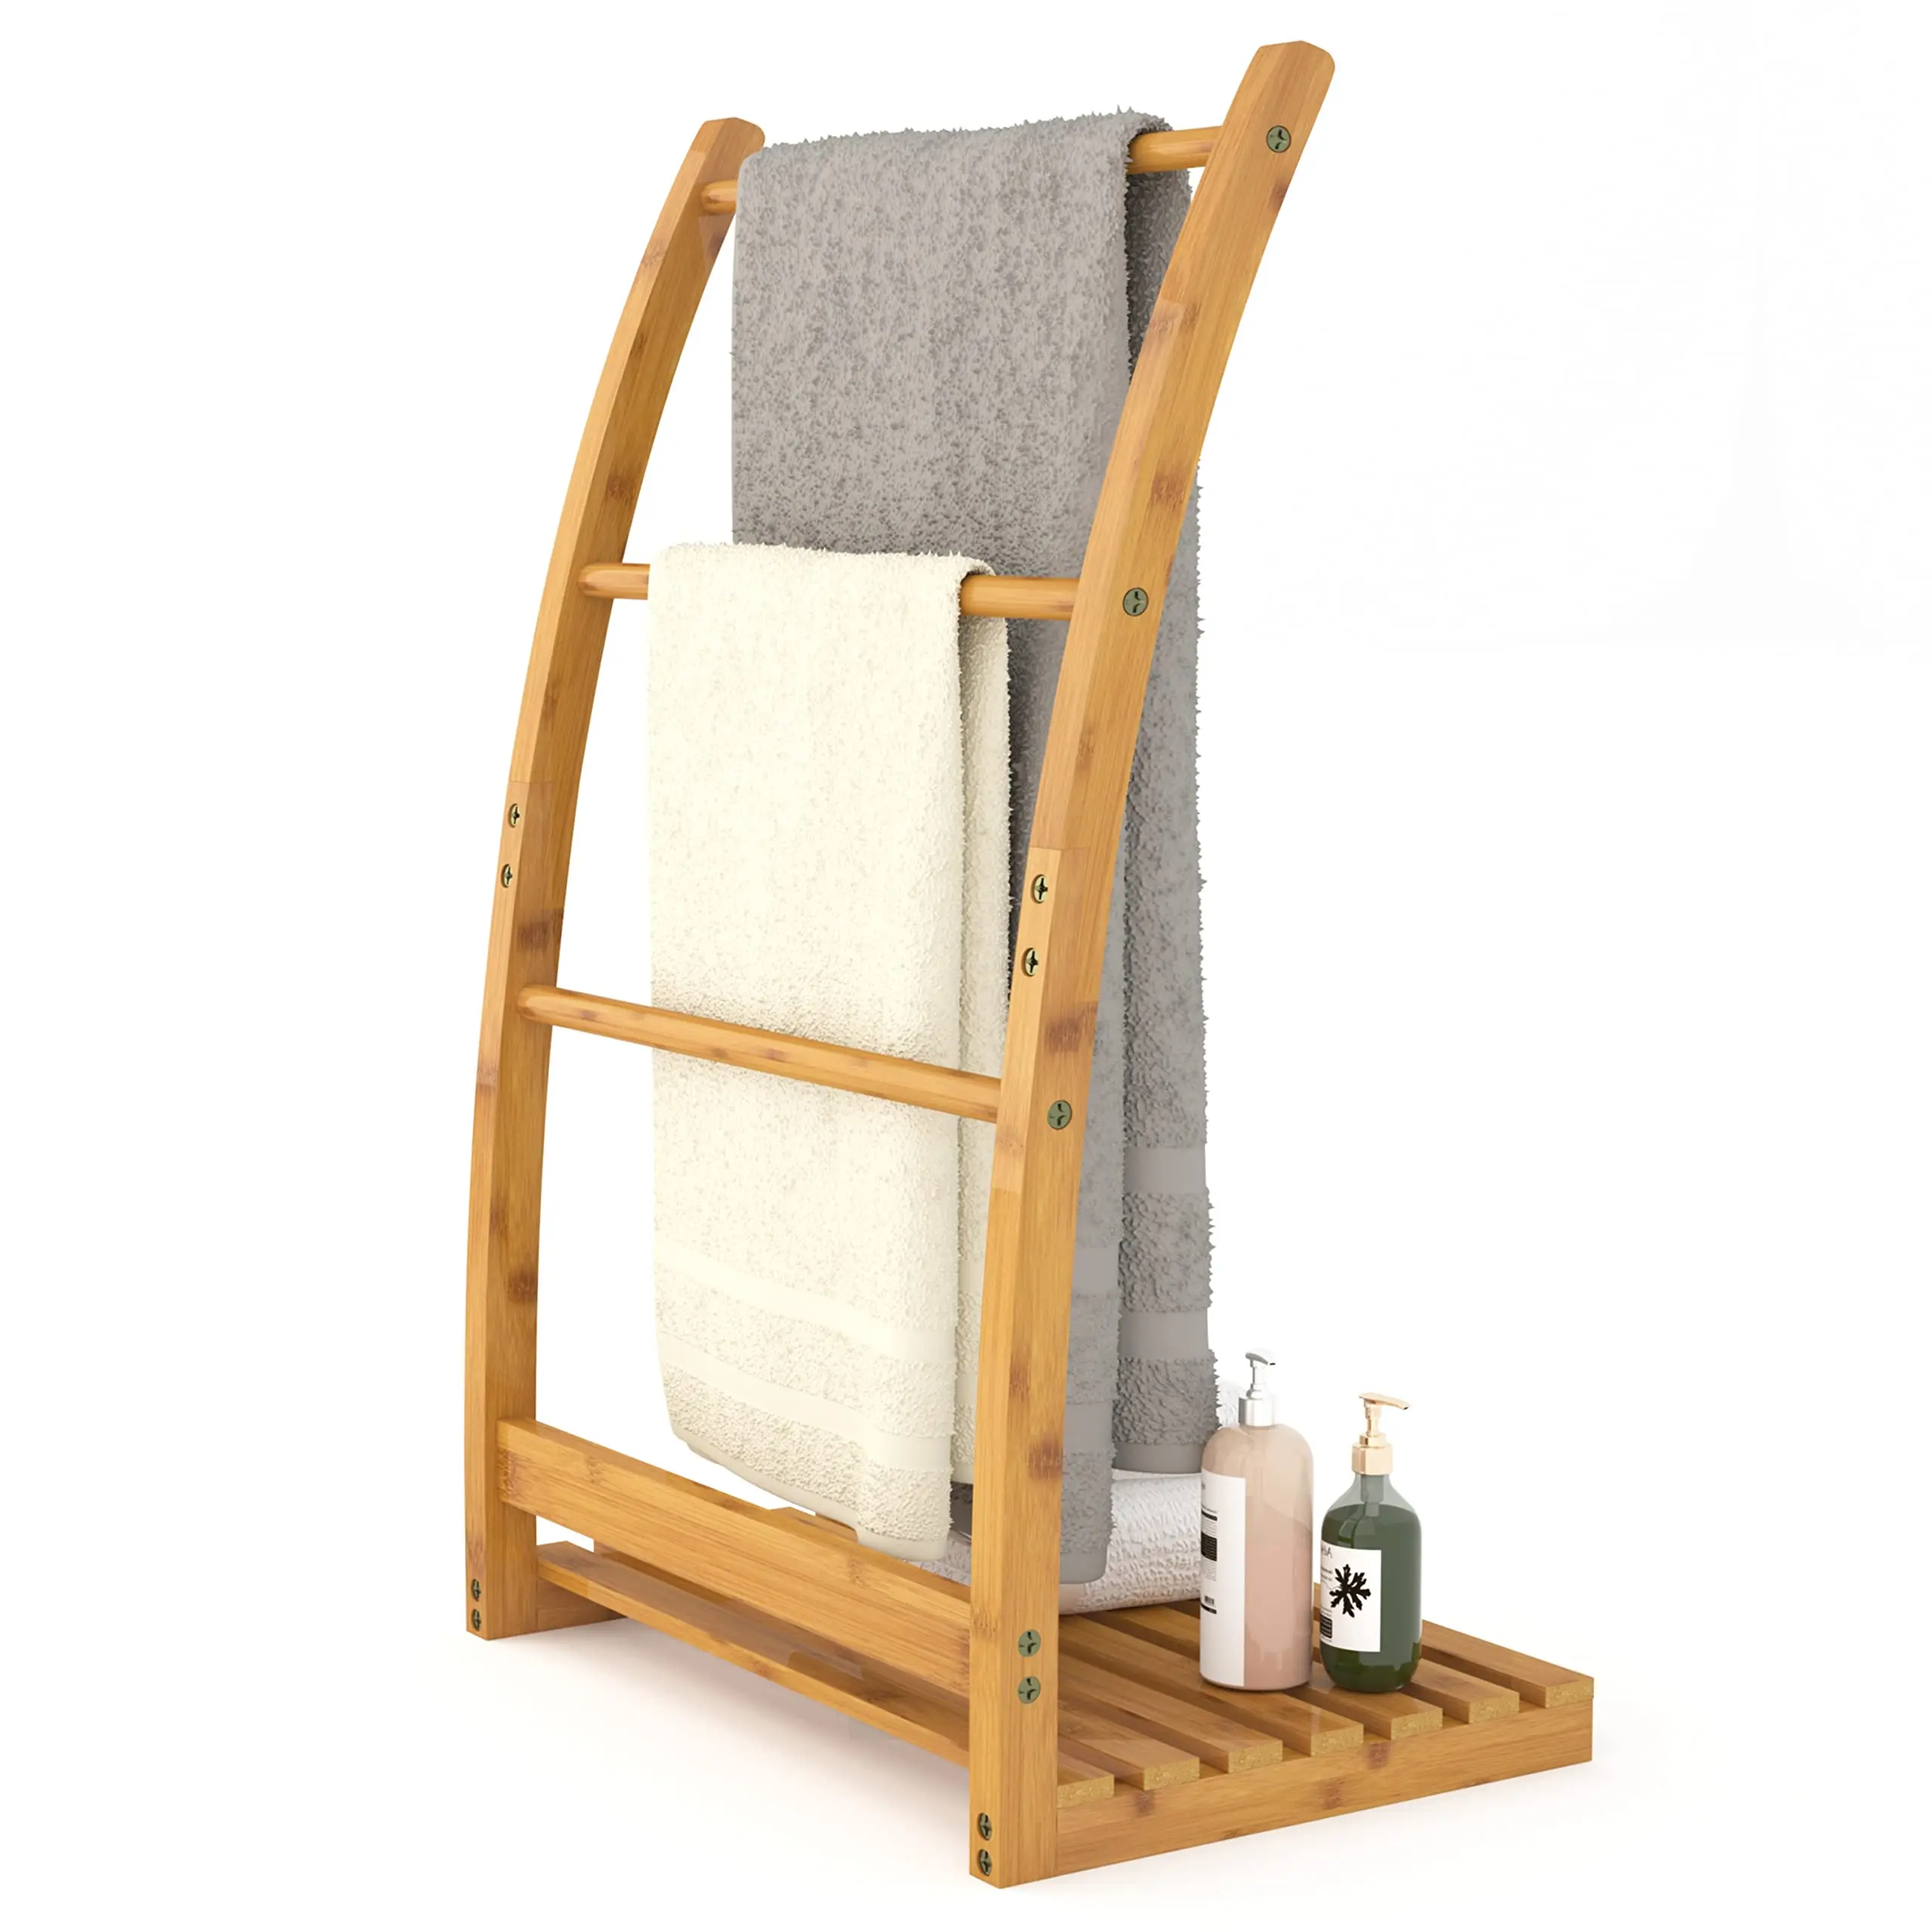 

3 Tier Bamboo Towel Rack Stand Free Standing Blanket Rack with Bottom Storage Shelf for Bathroom Living Room